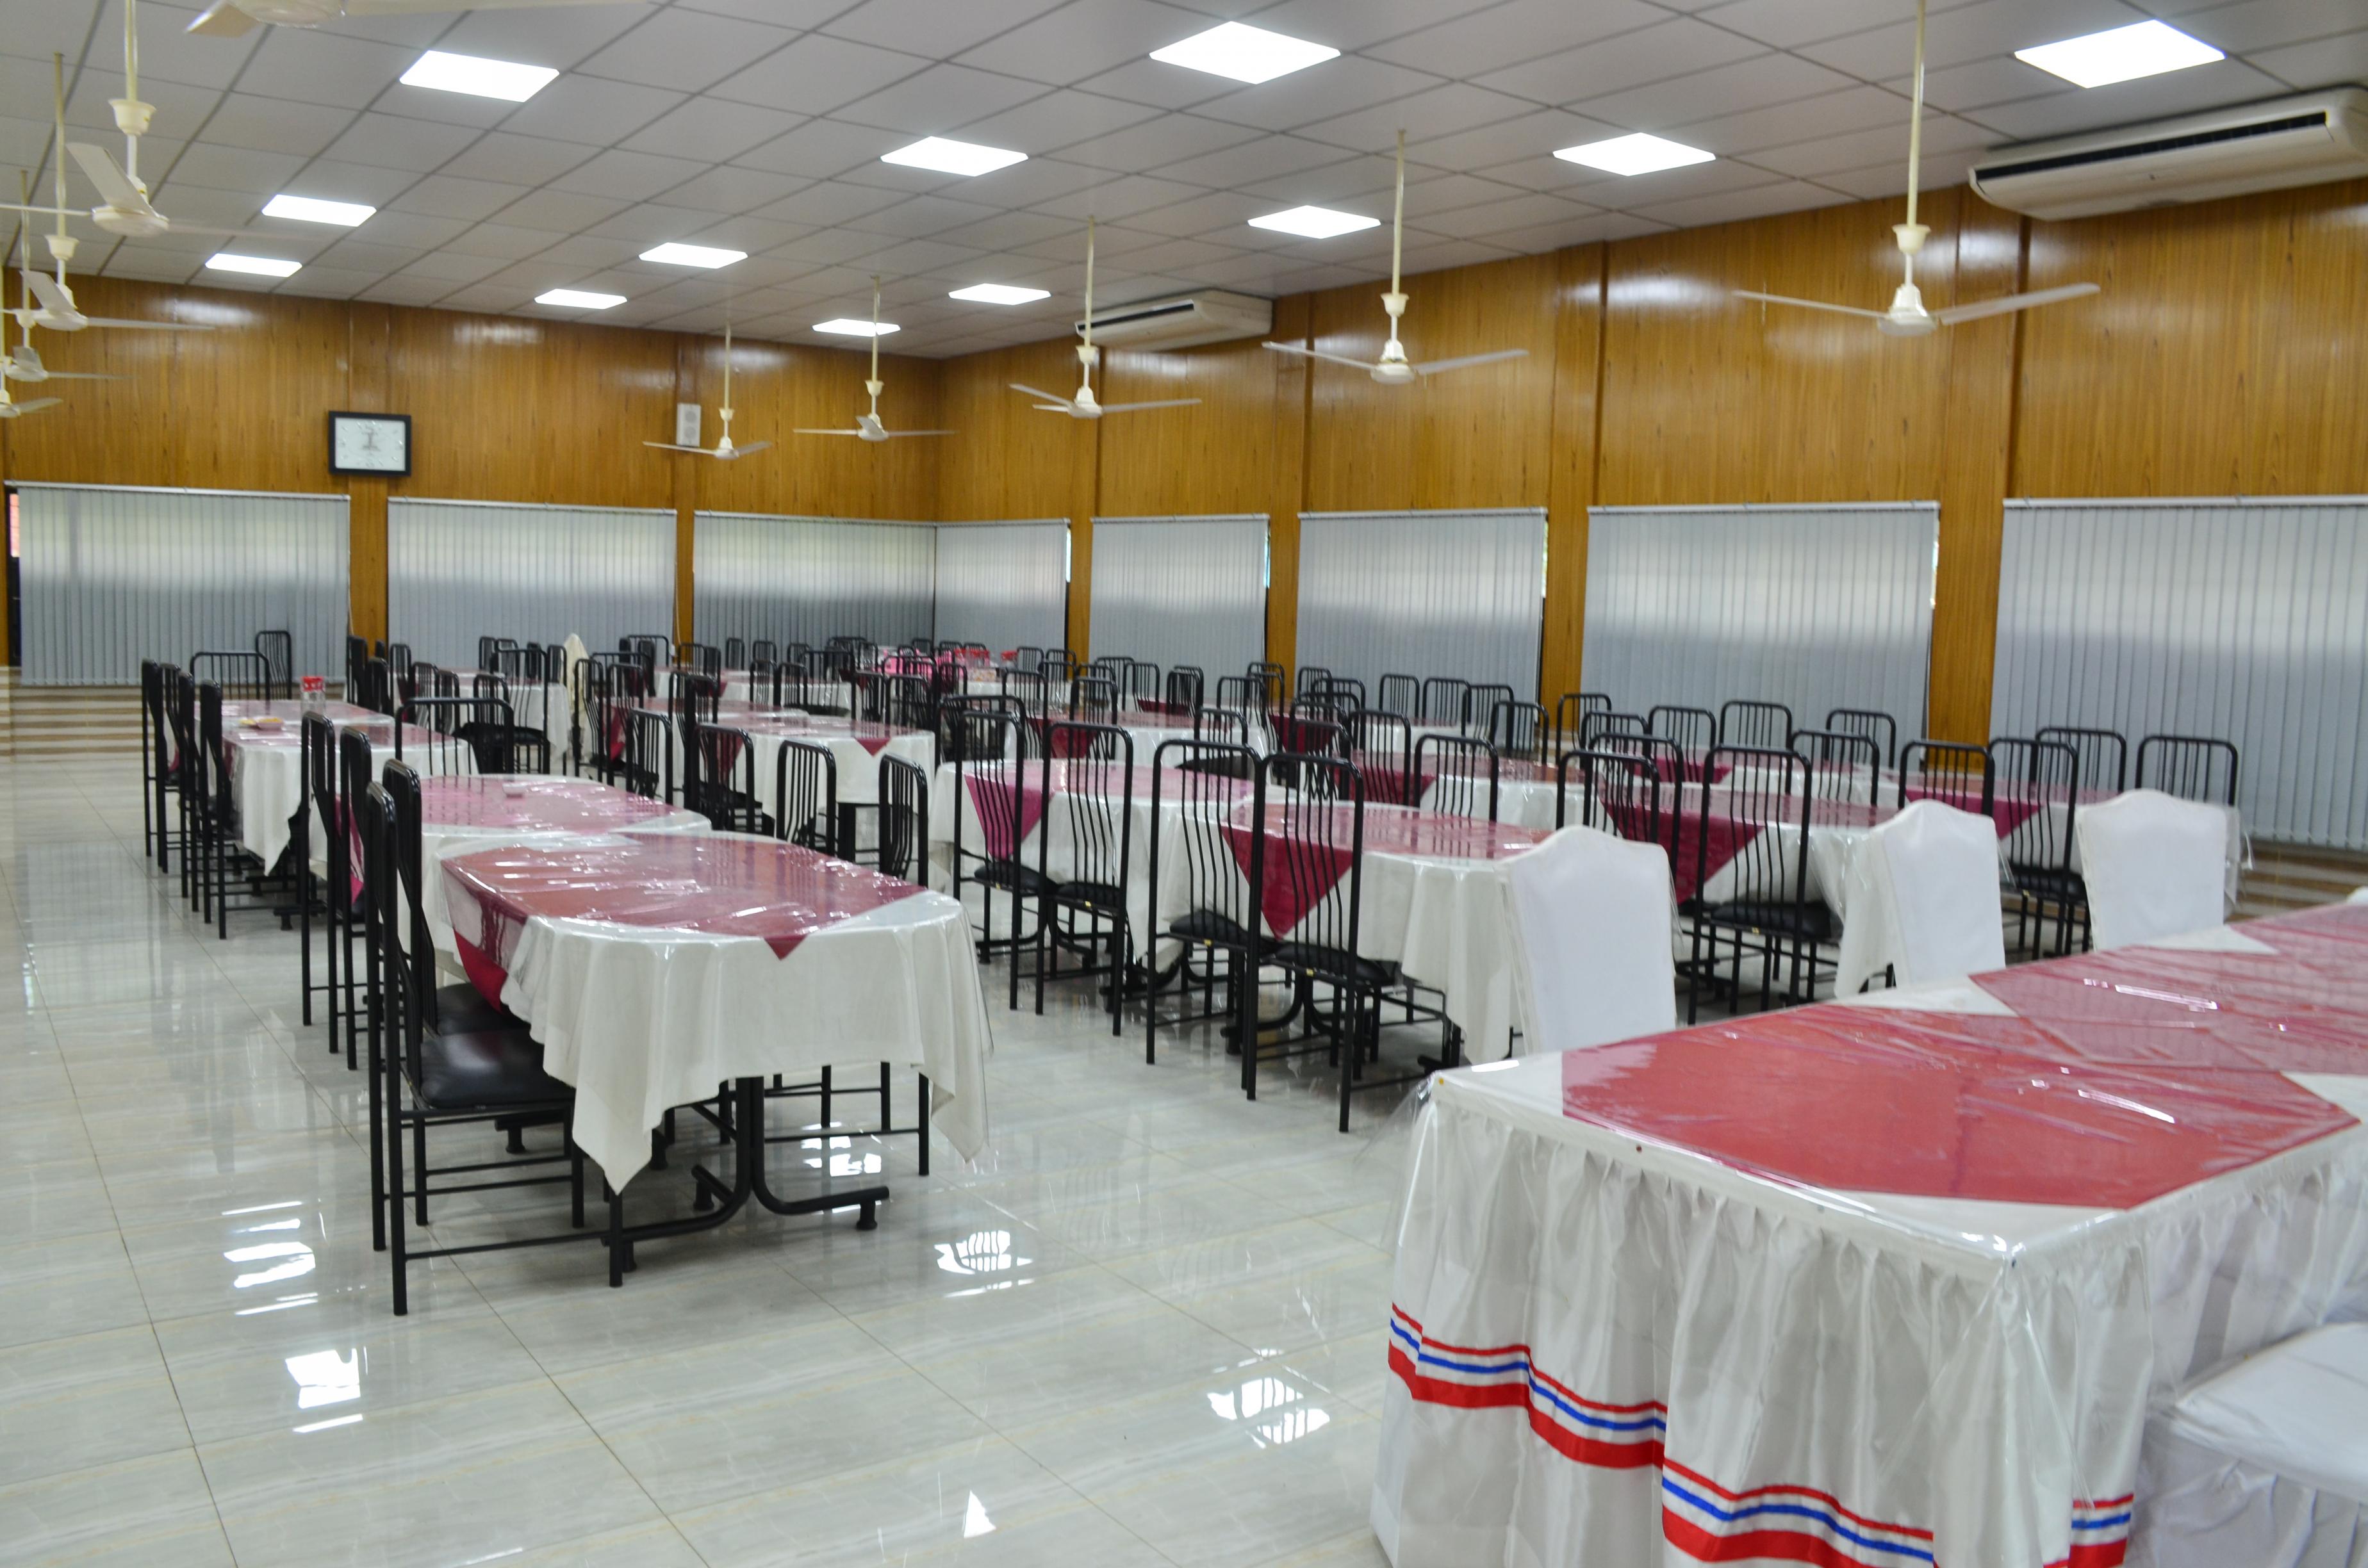 Dormitory and Cafeteria facilities at BPATC